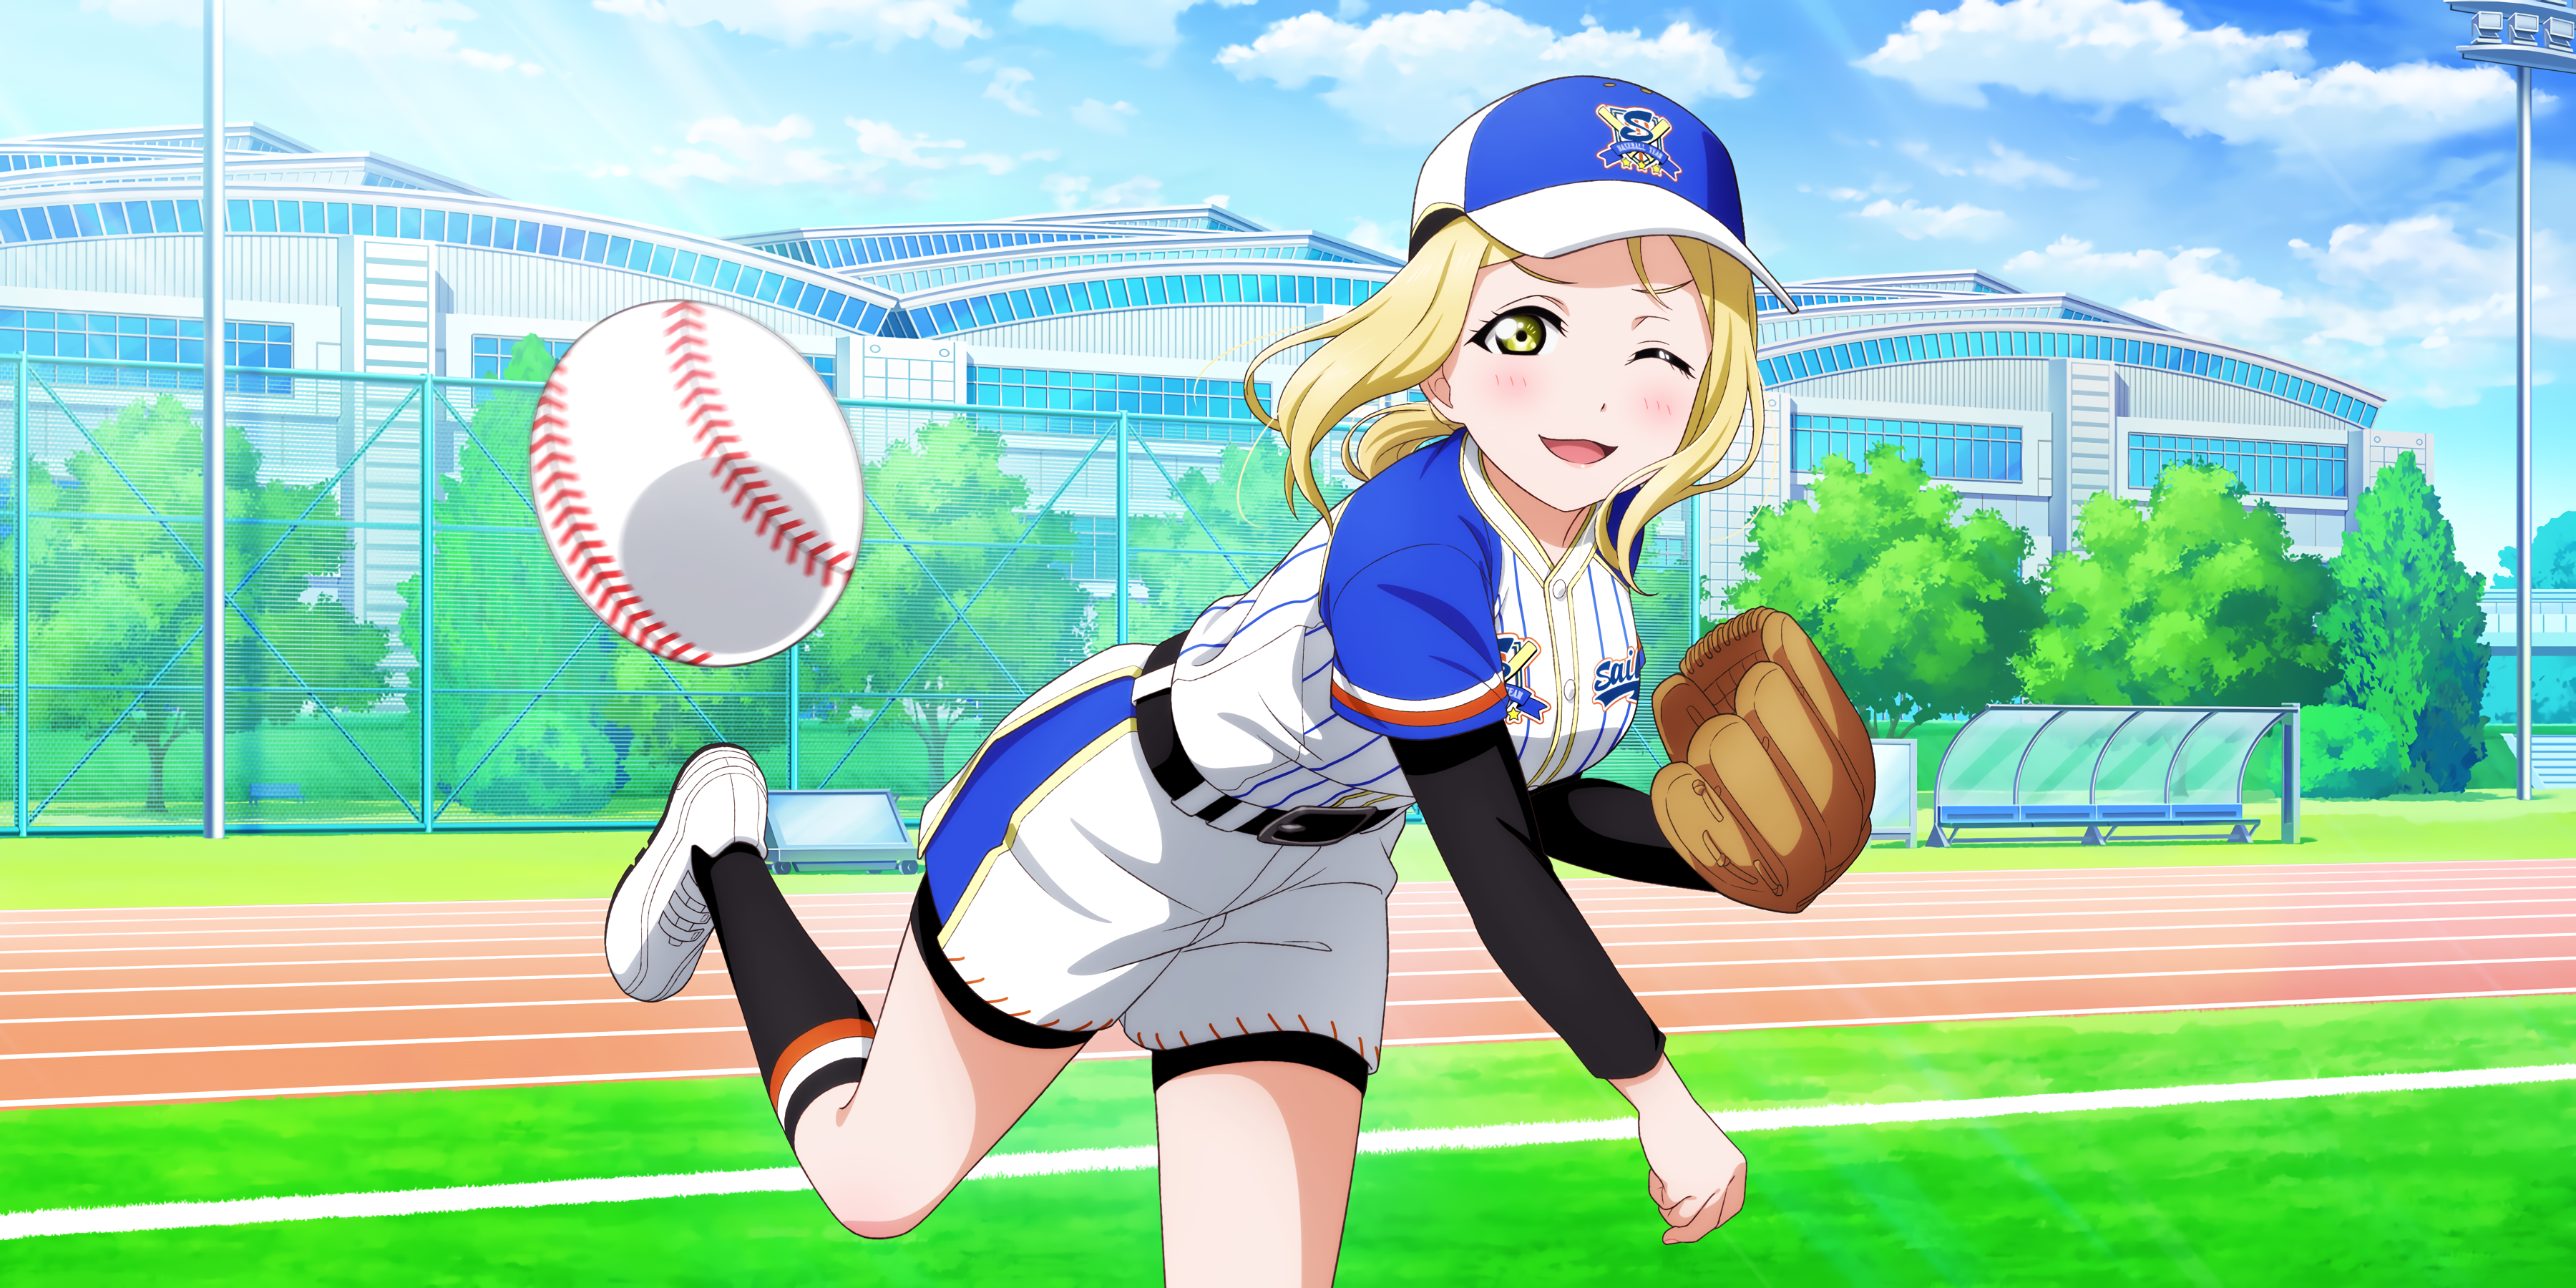 Anime 3600x1800 Ohara Mari Love Live! Sunshine Love Live! anime anime girls baseball baseball glove baseball cap one eye closed clouds sunlight